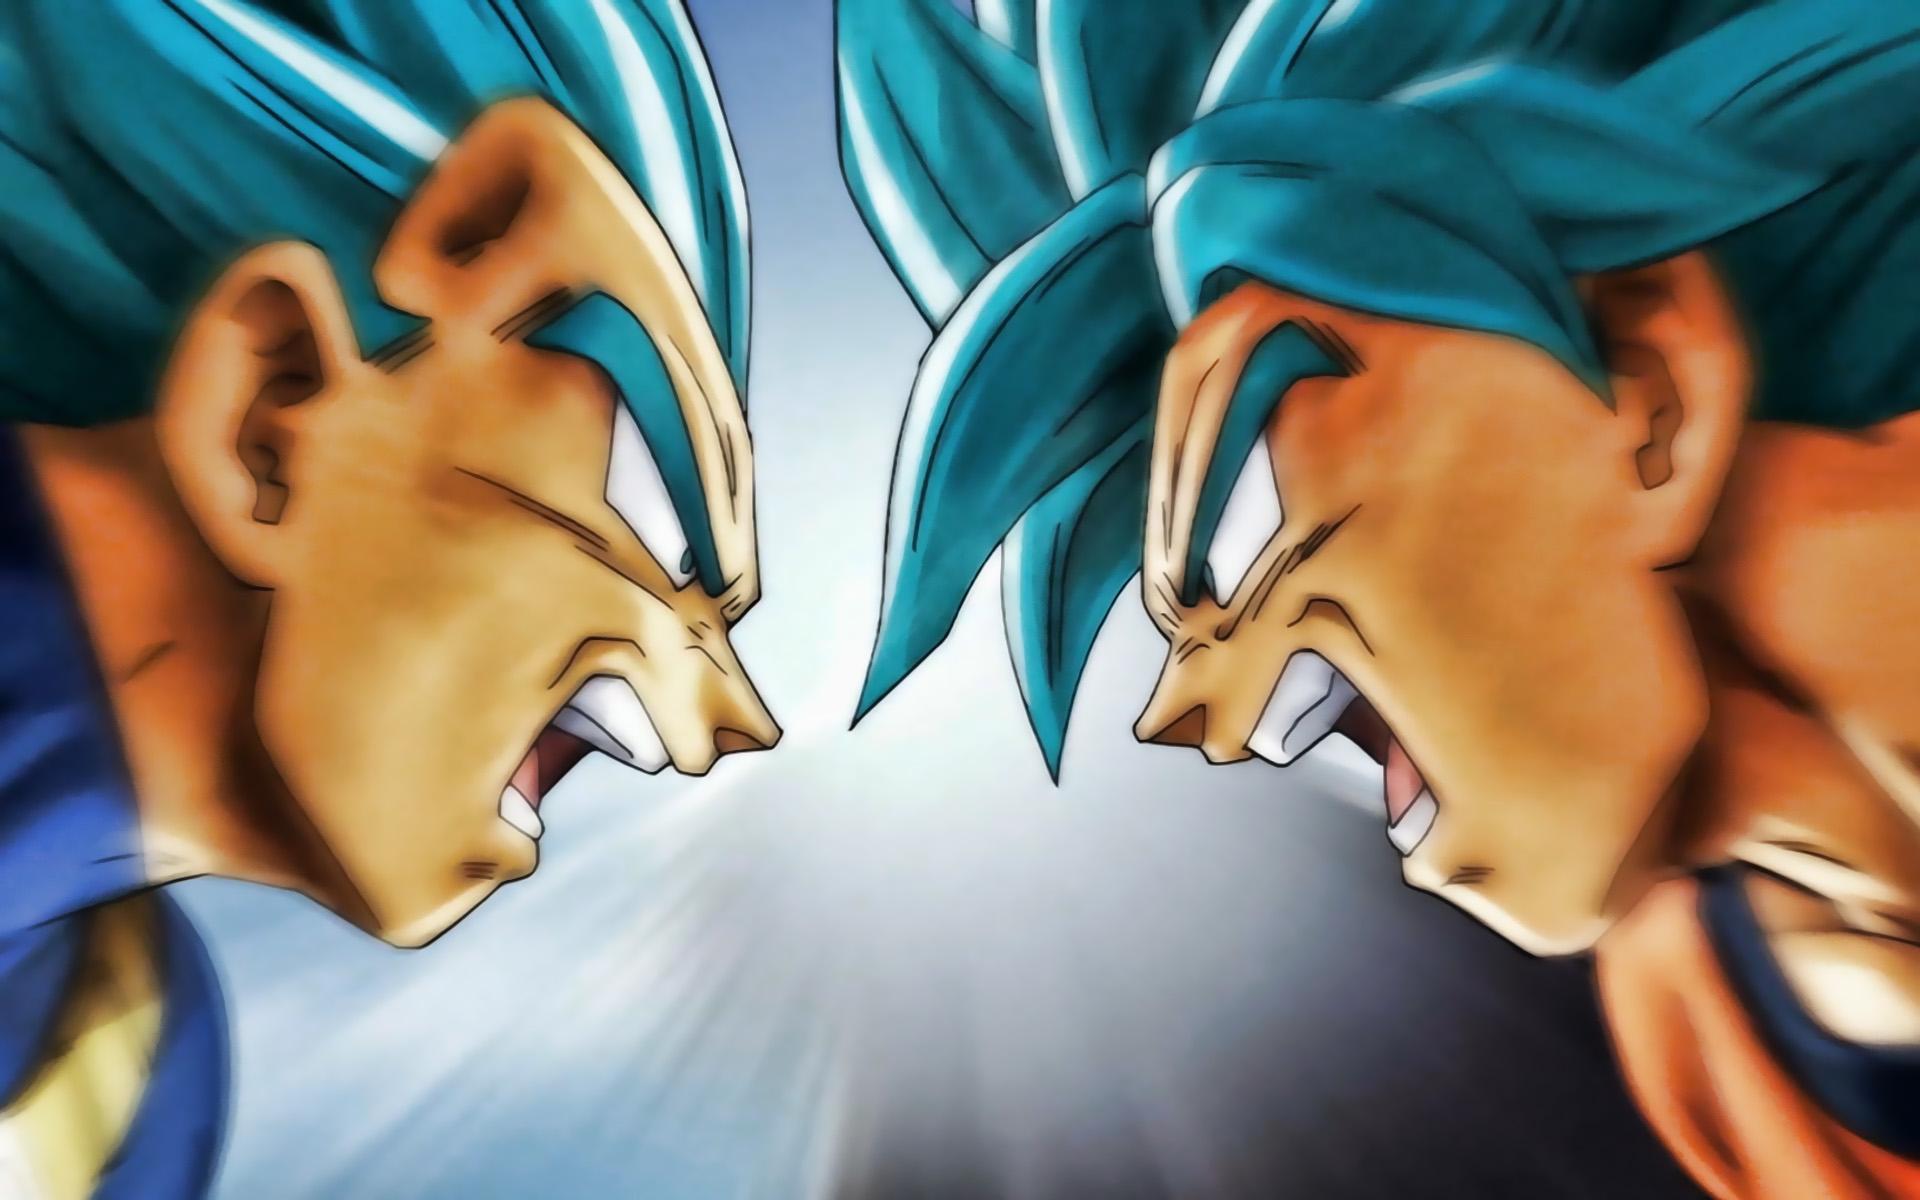 Download wallpaper Goku vs Vegeta, DBS, battle, artwork, fighters